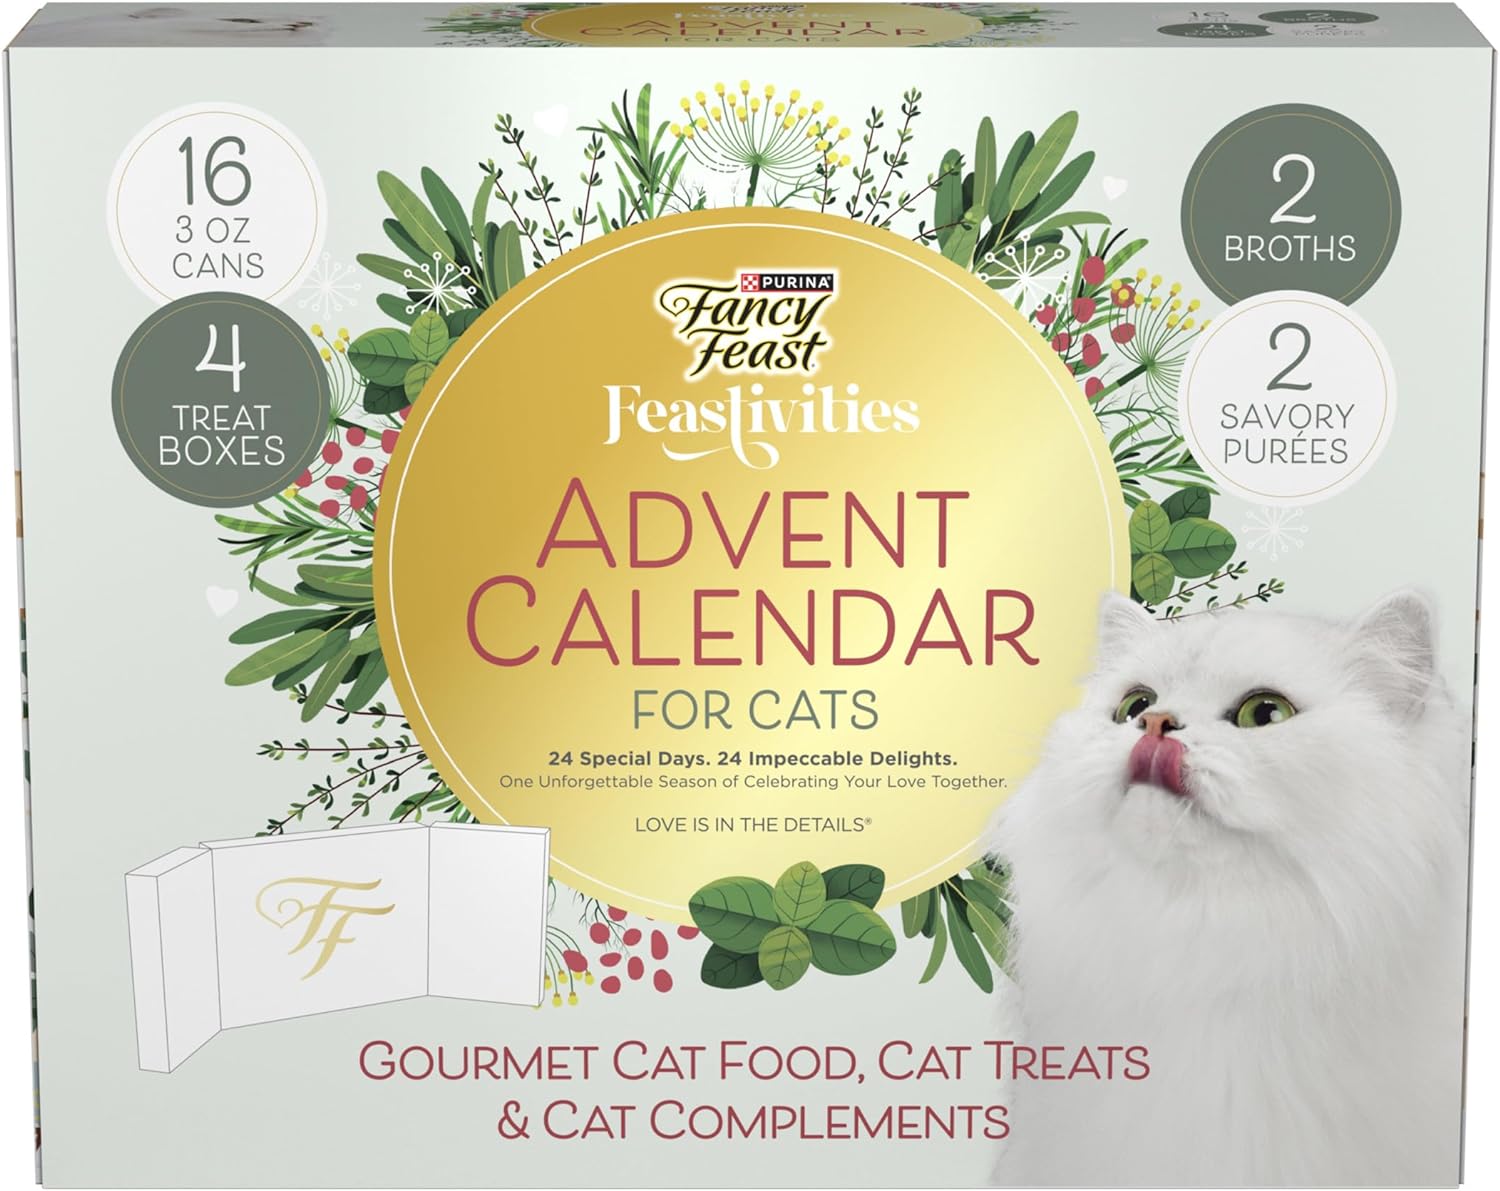 Fancy feast advent calendar iHeartCats com